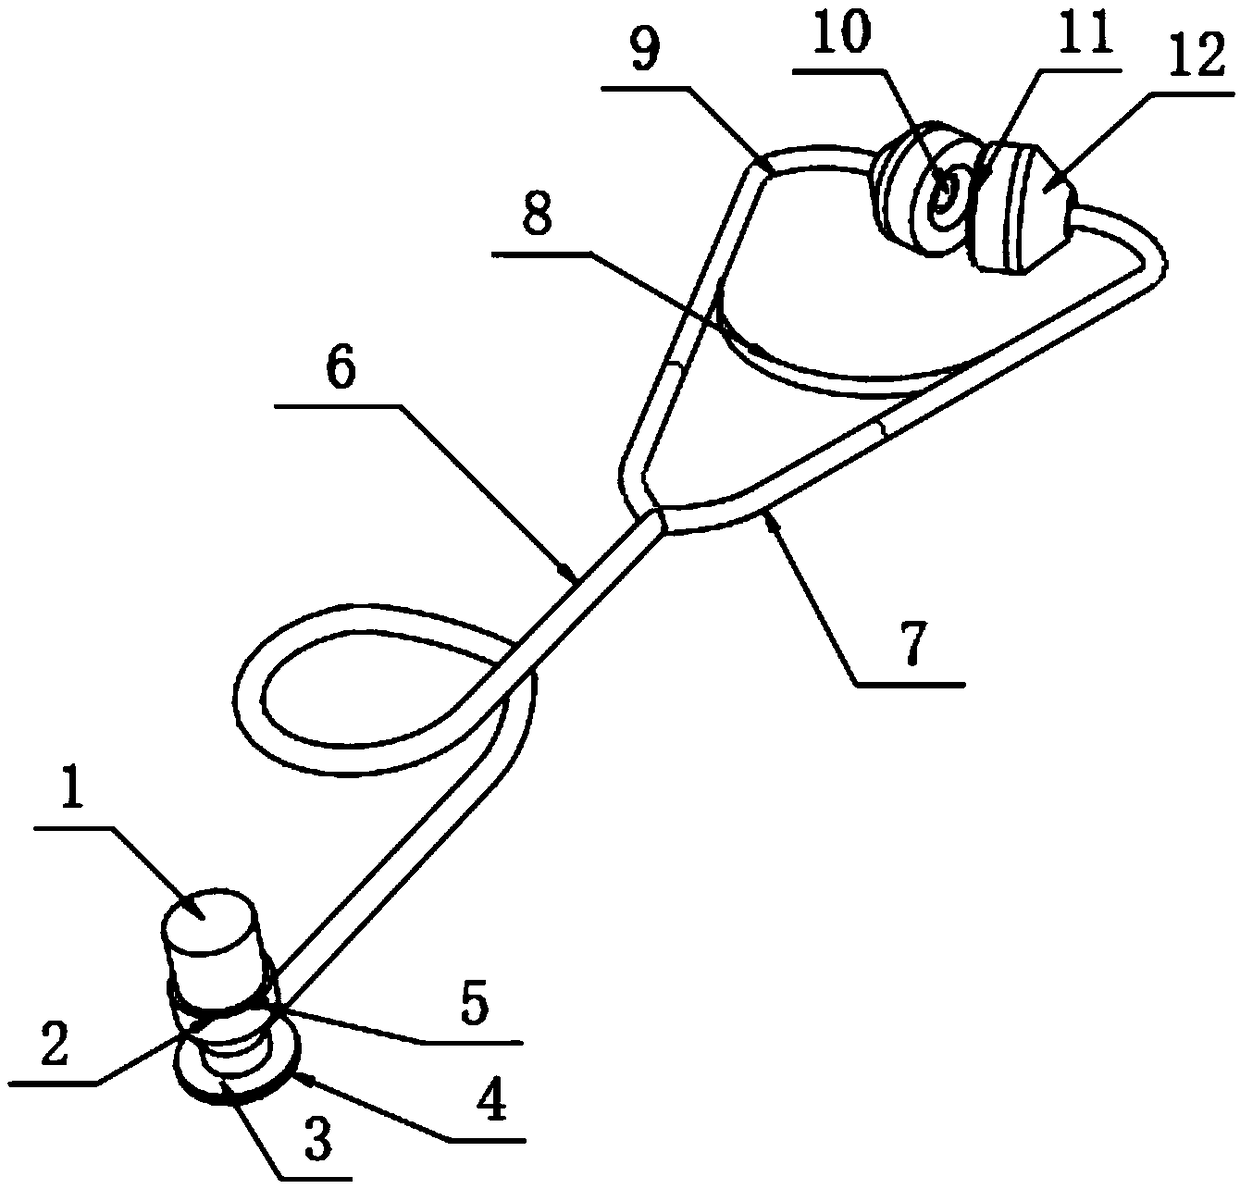 Stethoscope used in pediatric department